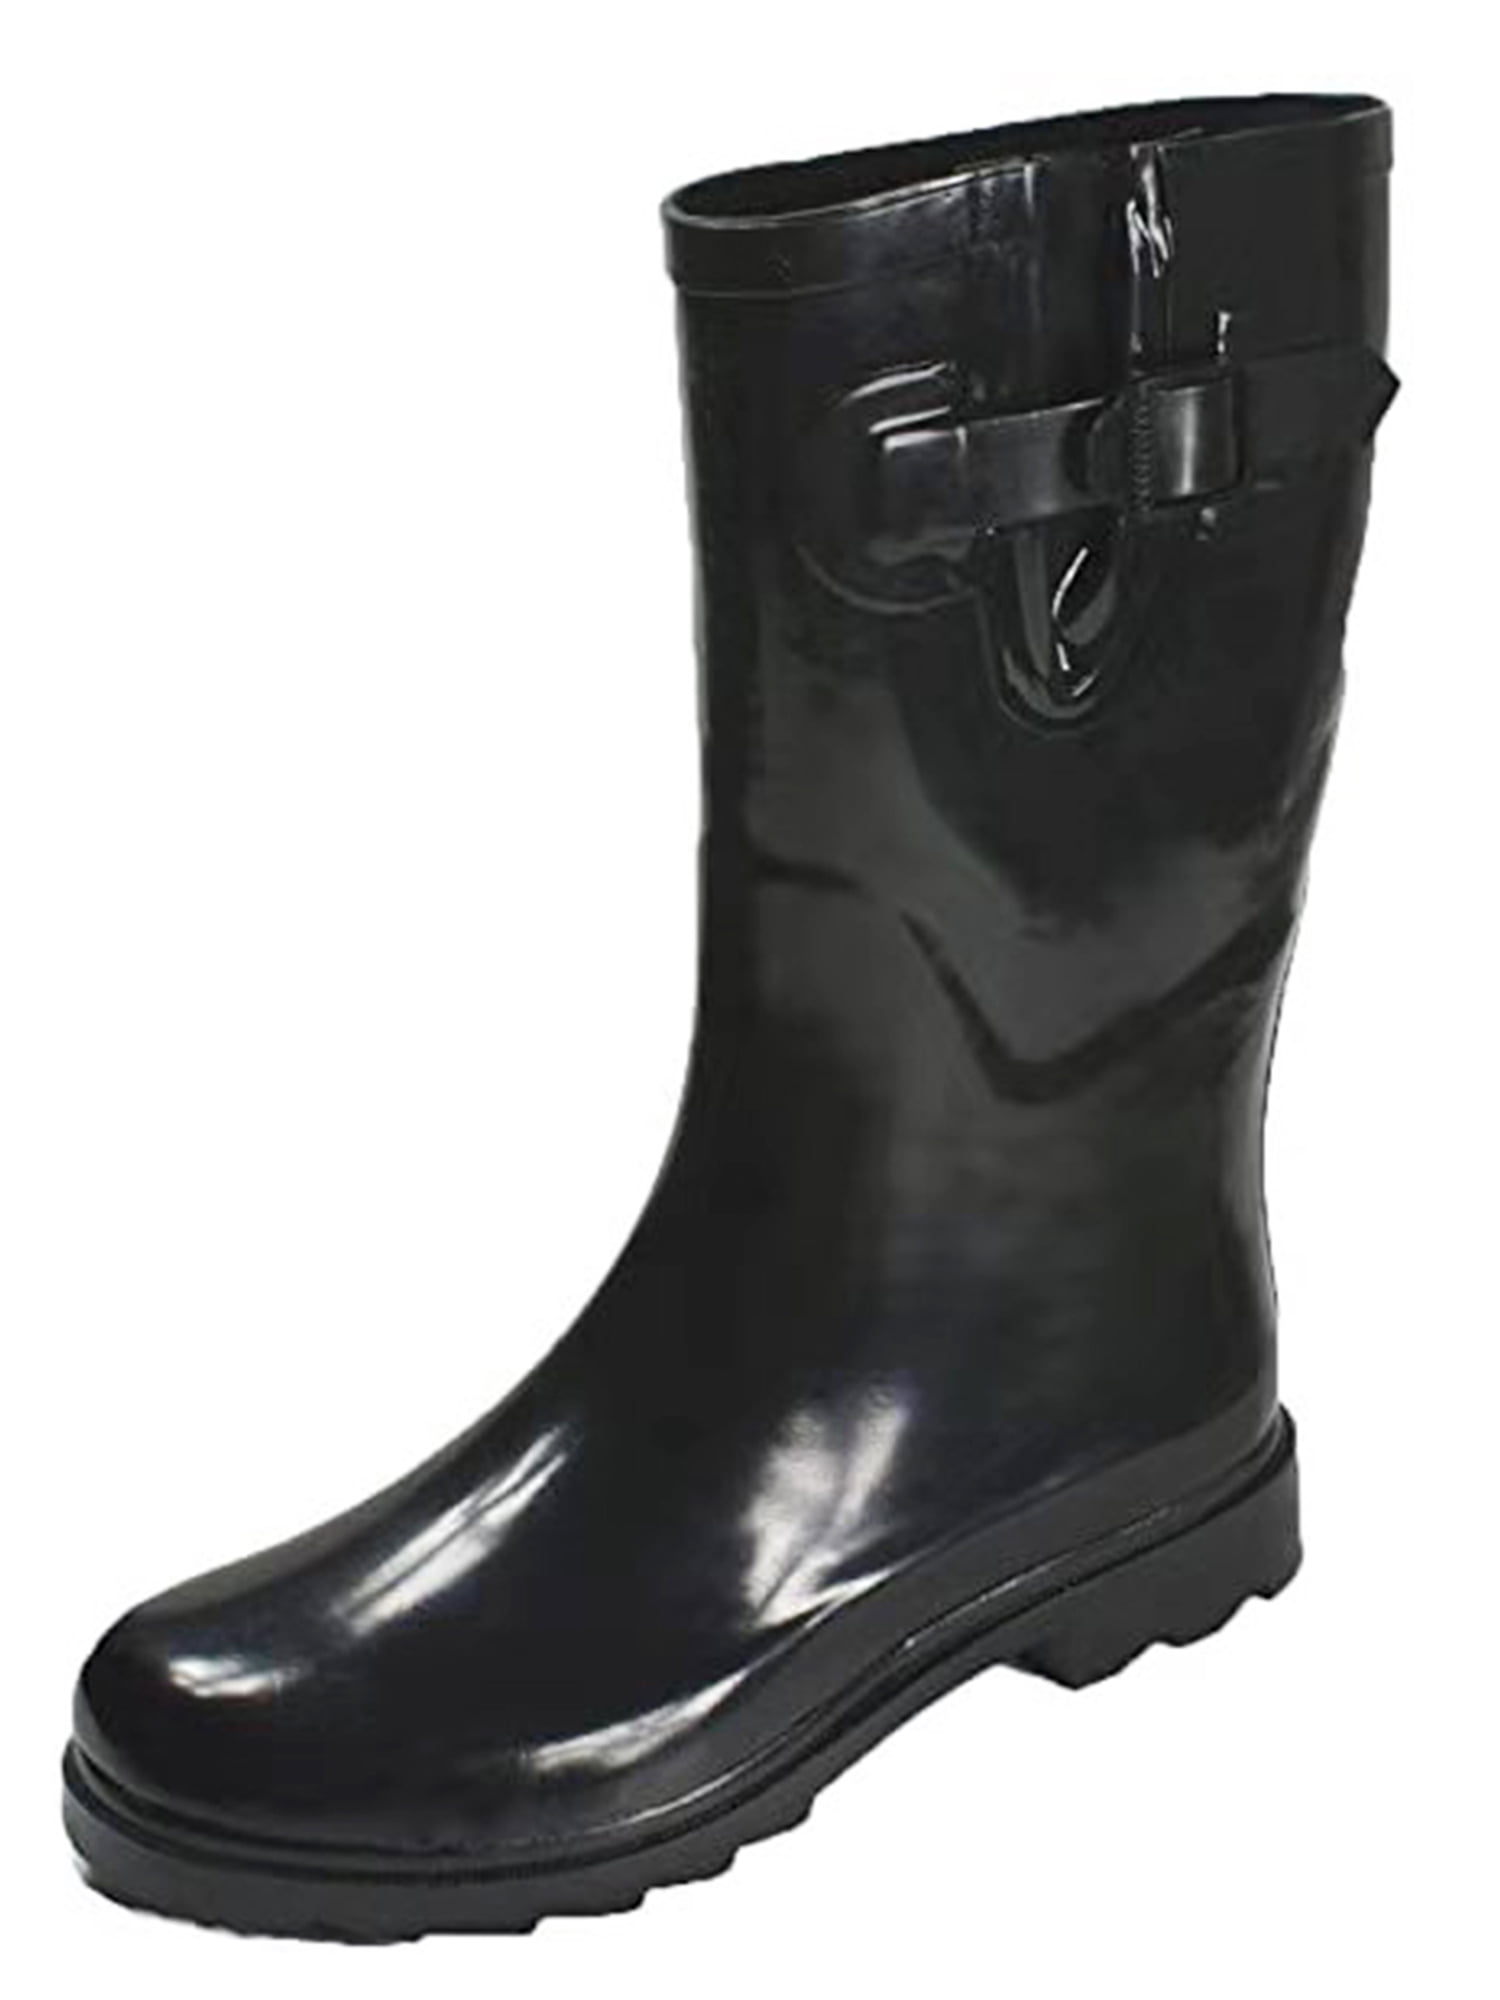 Tanleewa Fashion Women’s Rain Boots Nonslip Rain Shoes Waterproof Garden Boots Insulated Work